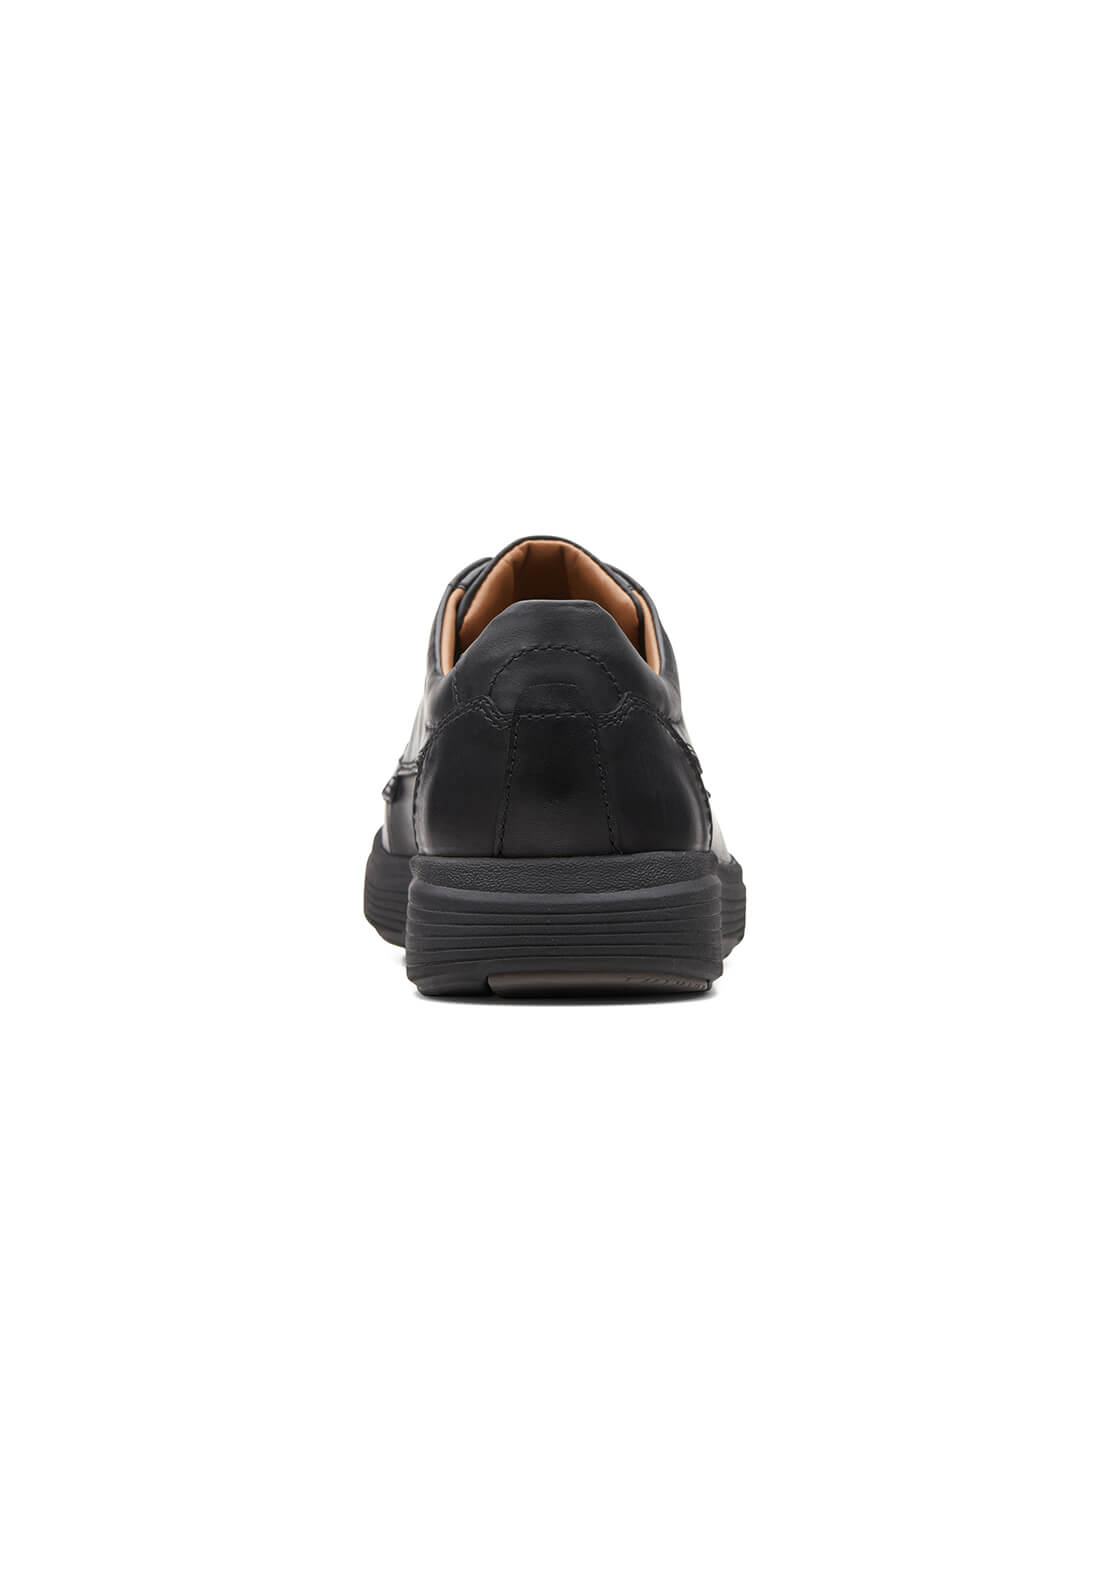 Clarks Un Abode Ease Casual Shoe - Black 6 Shaws Department Stores